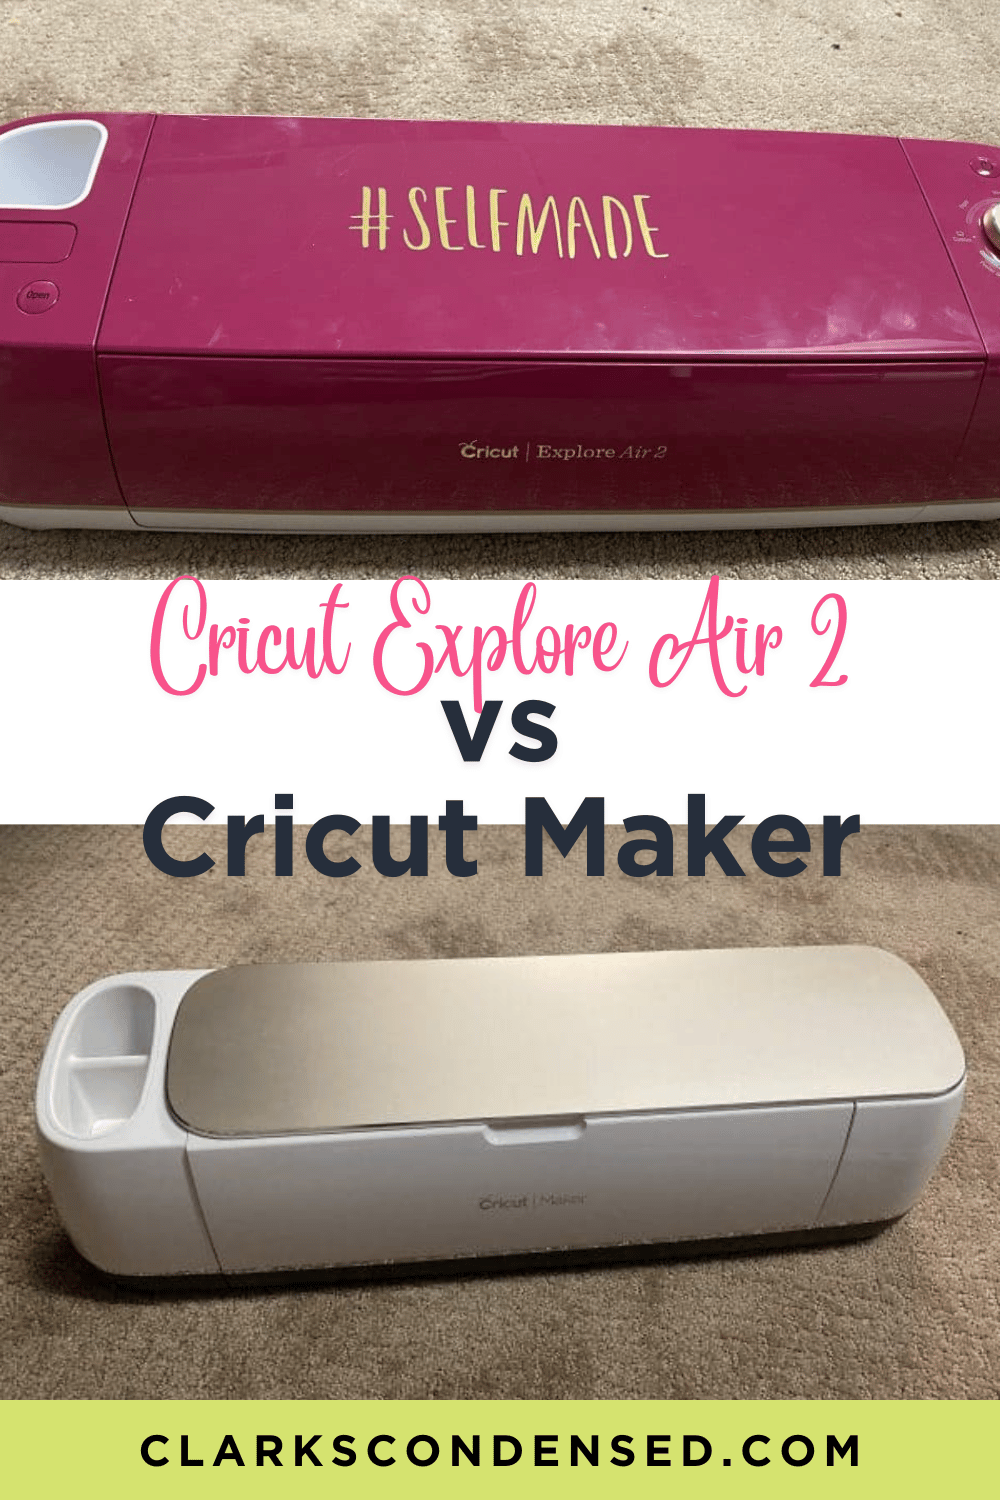 Which Cricut Should I buy? Cricut Maker, Explore Air 2 or Joy - Weekend  Craft